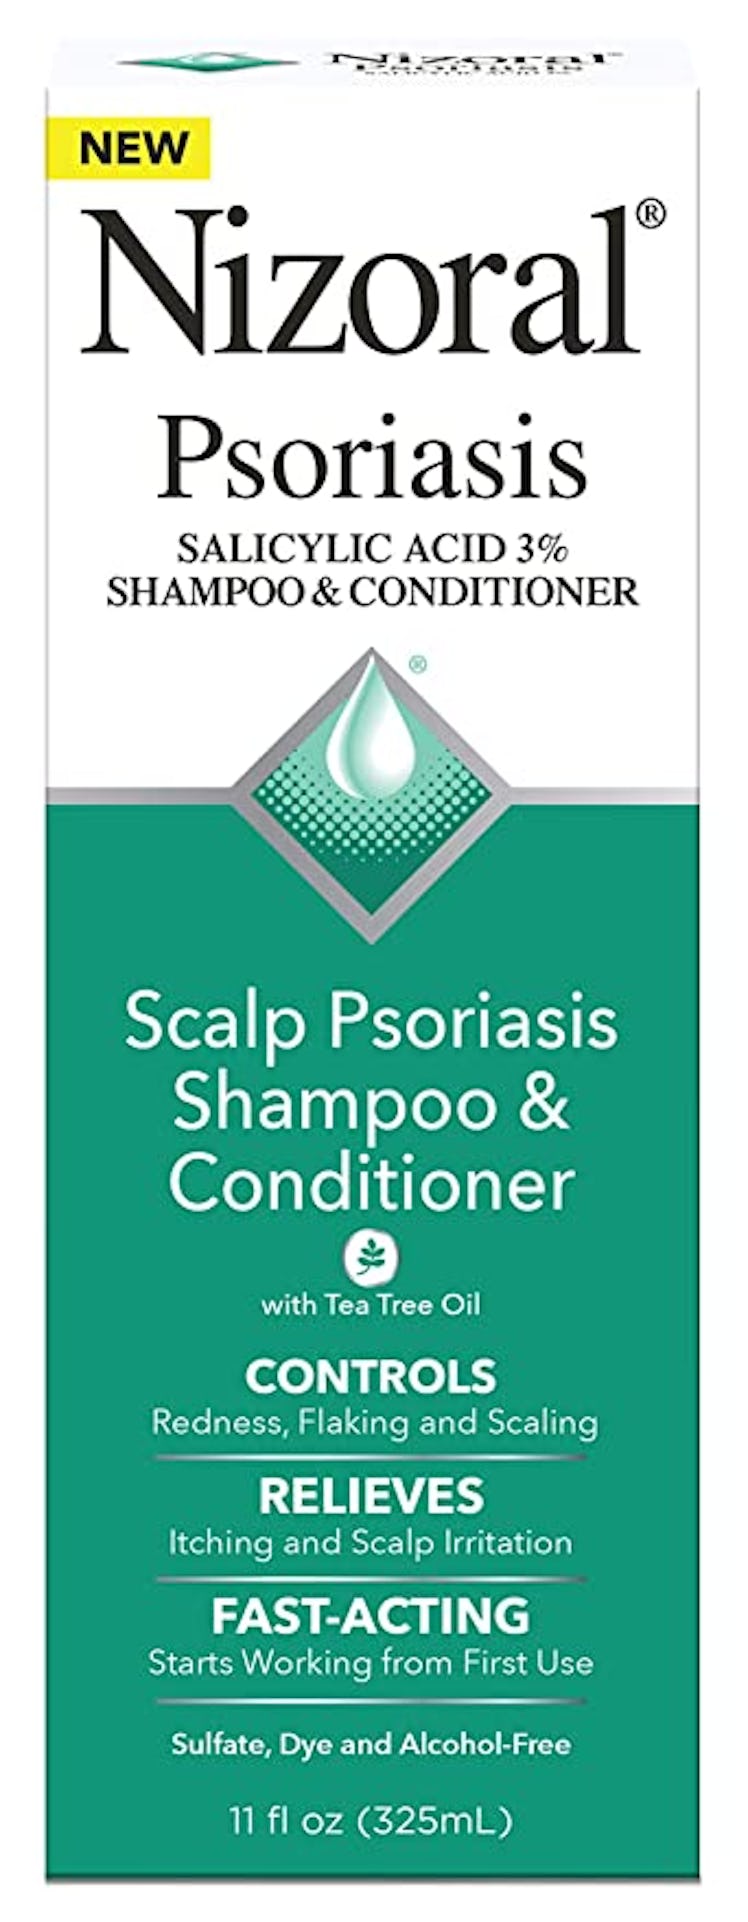 nizoral psoriasis shampoo for dry itchy scalp